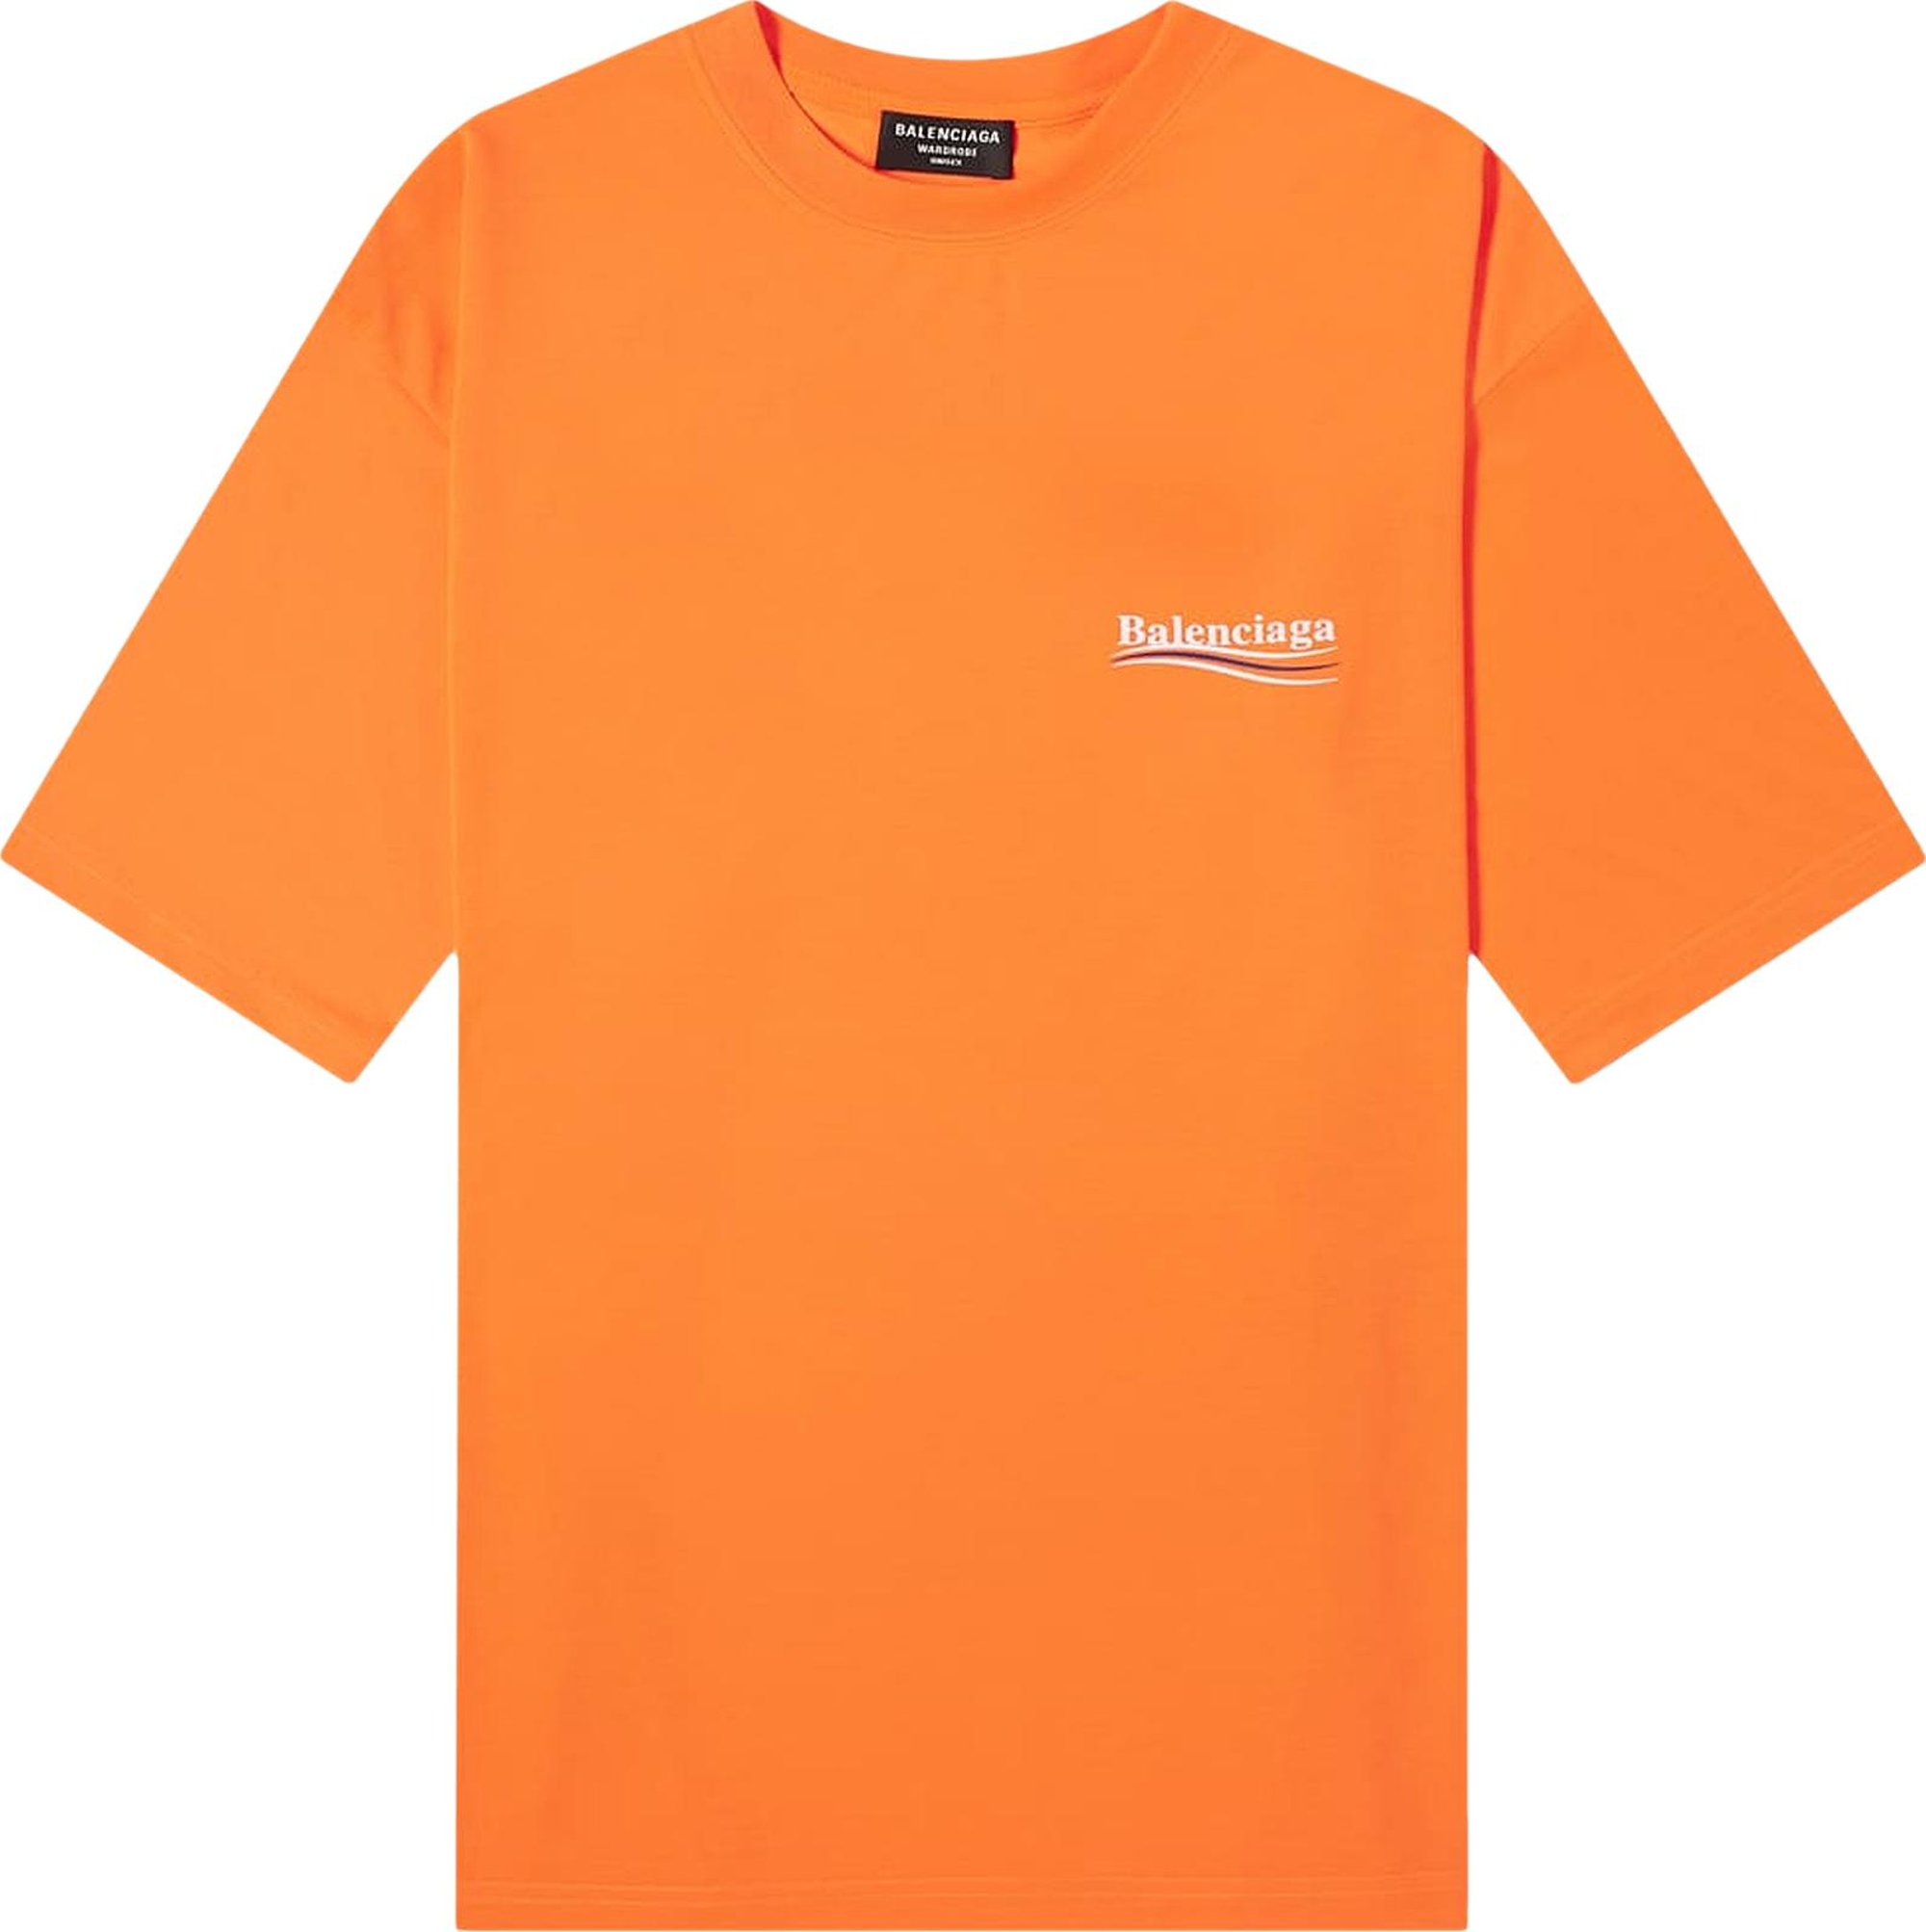 Buy Balenciaga Large Fit T-Shirt 'Fluo Orange' - 641675 TKVE8 7073 | GOAT